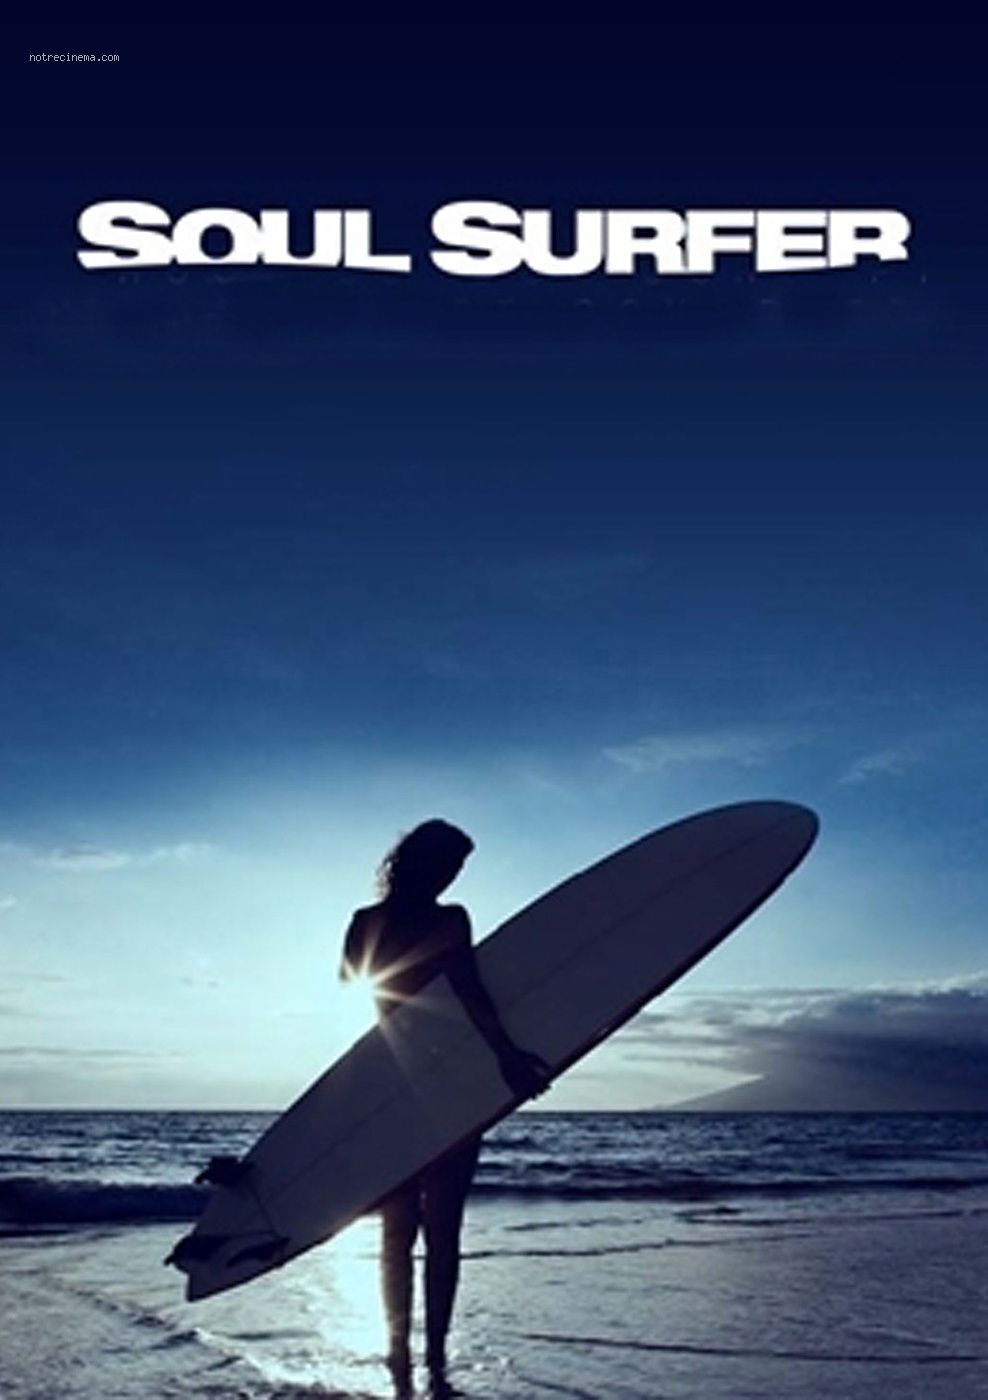 Soul Surferen.notrecinema.com